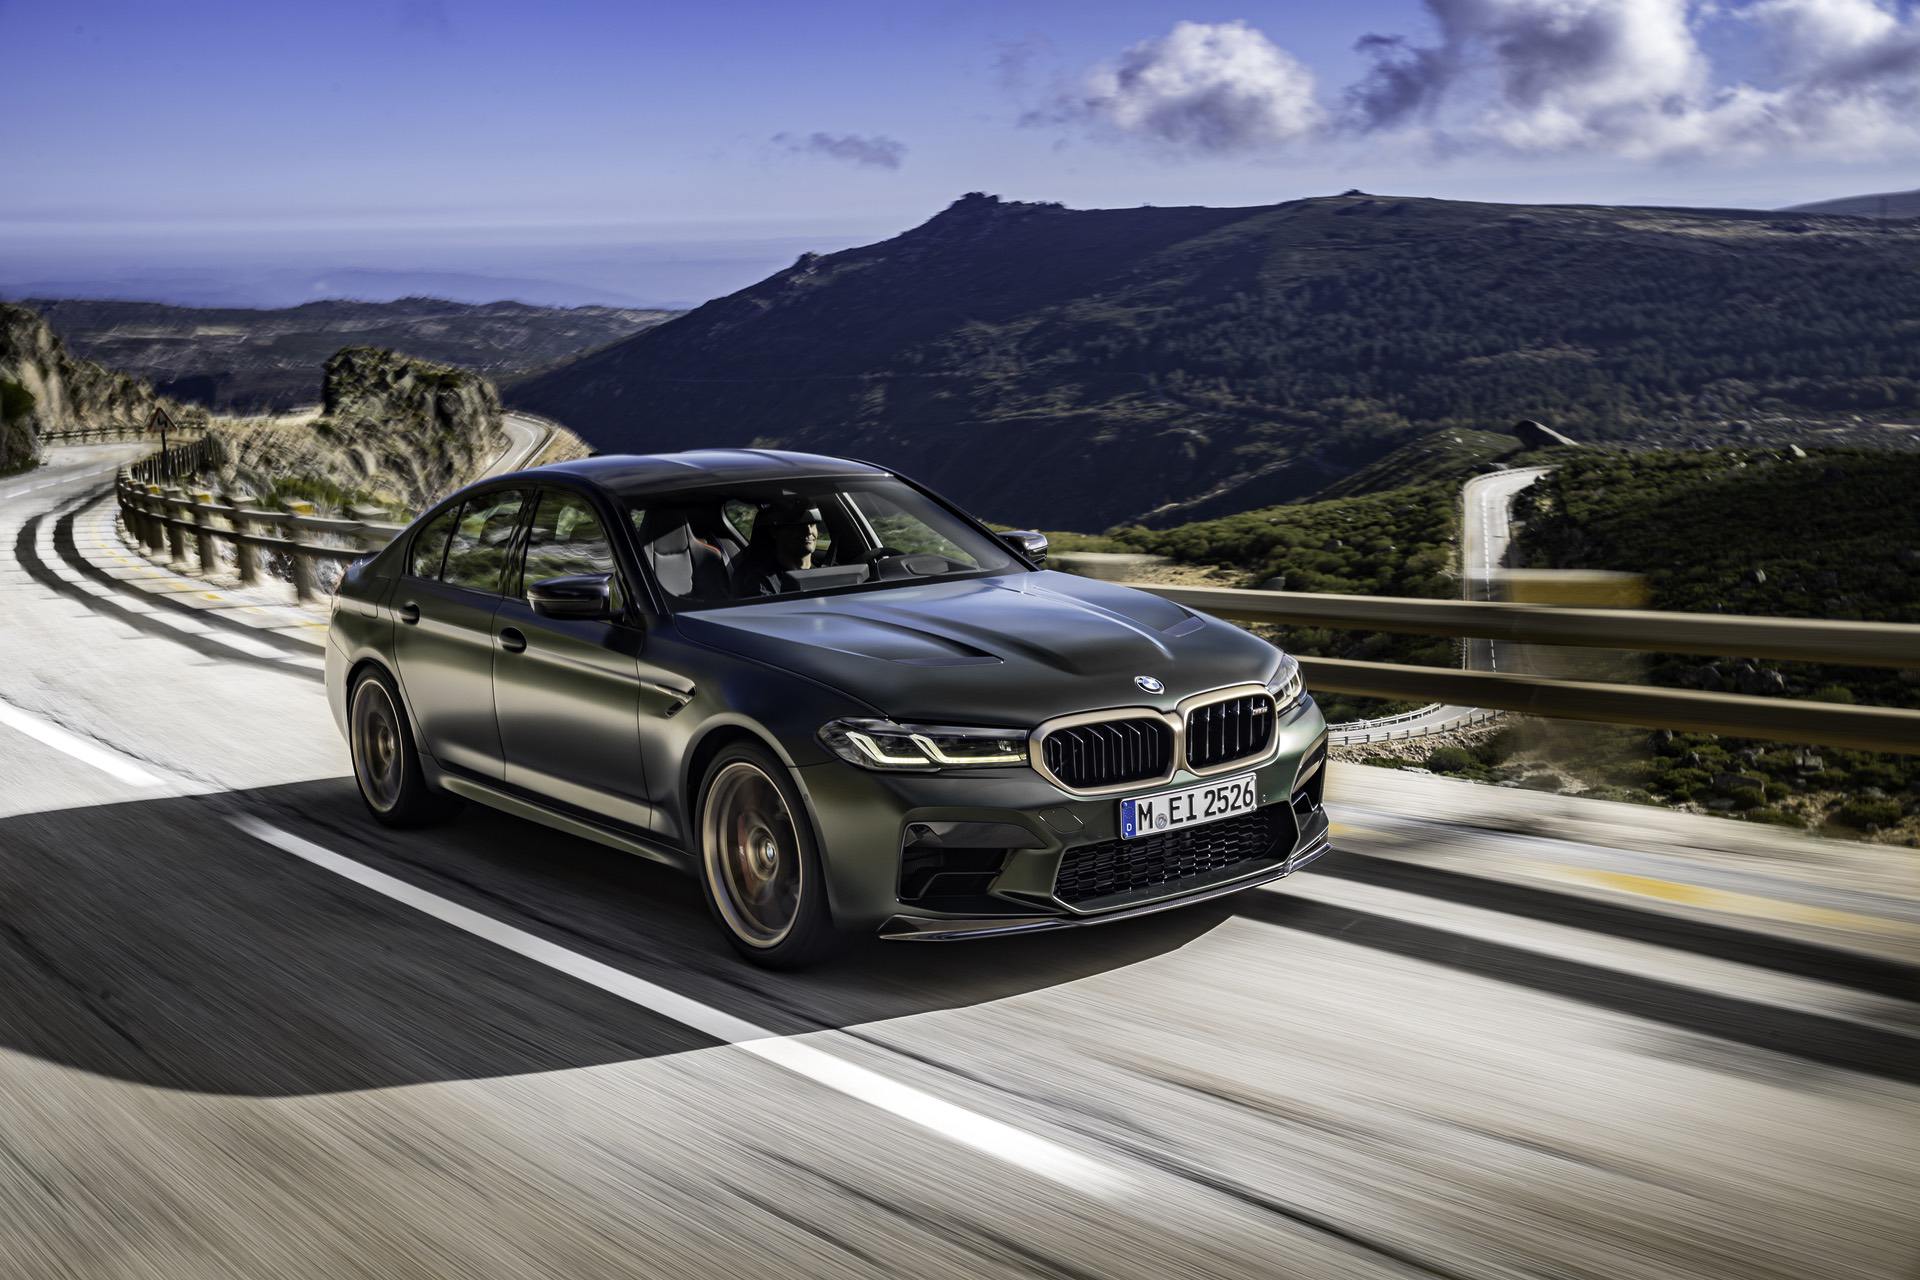 Manøvre Mainstream Staple Top Gear Reviews the BMW M5 CS -- Best M5 Ever?